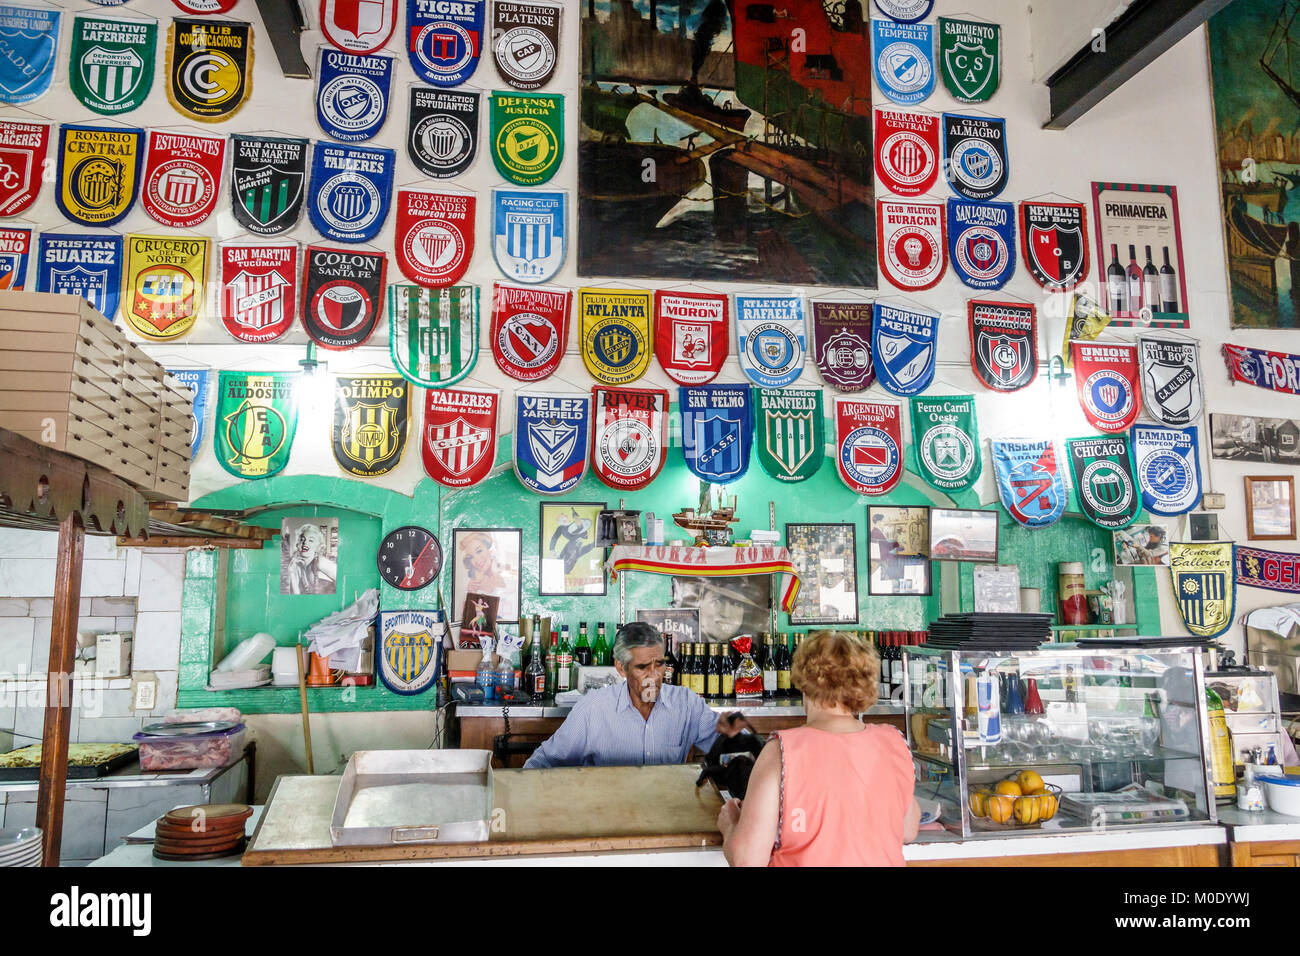 Buenos Aires Argentina,San Telmo,historic district,Bar Pedro Telmo,local pub,sports bar,sports team logos,counter,man men male,woman female women,Hisp Stock Photo